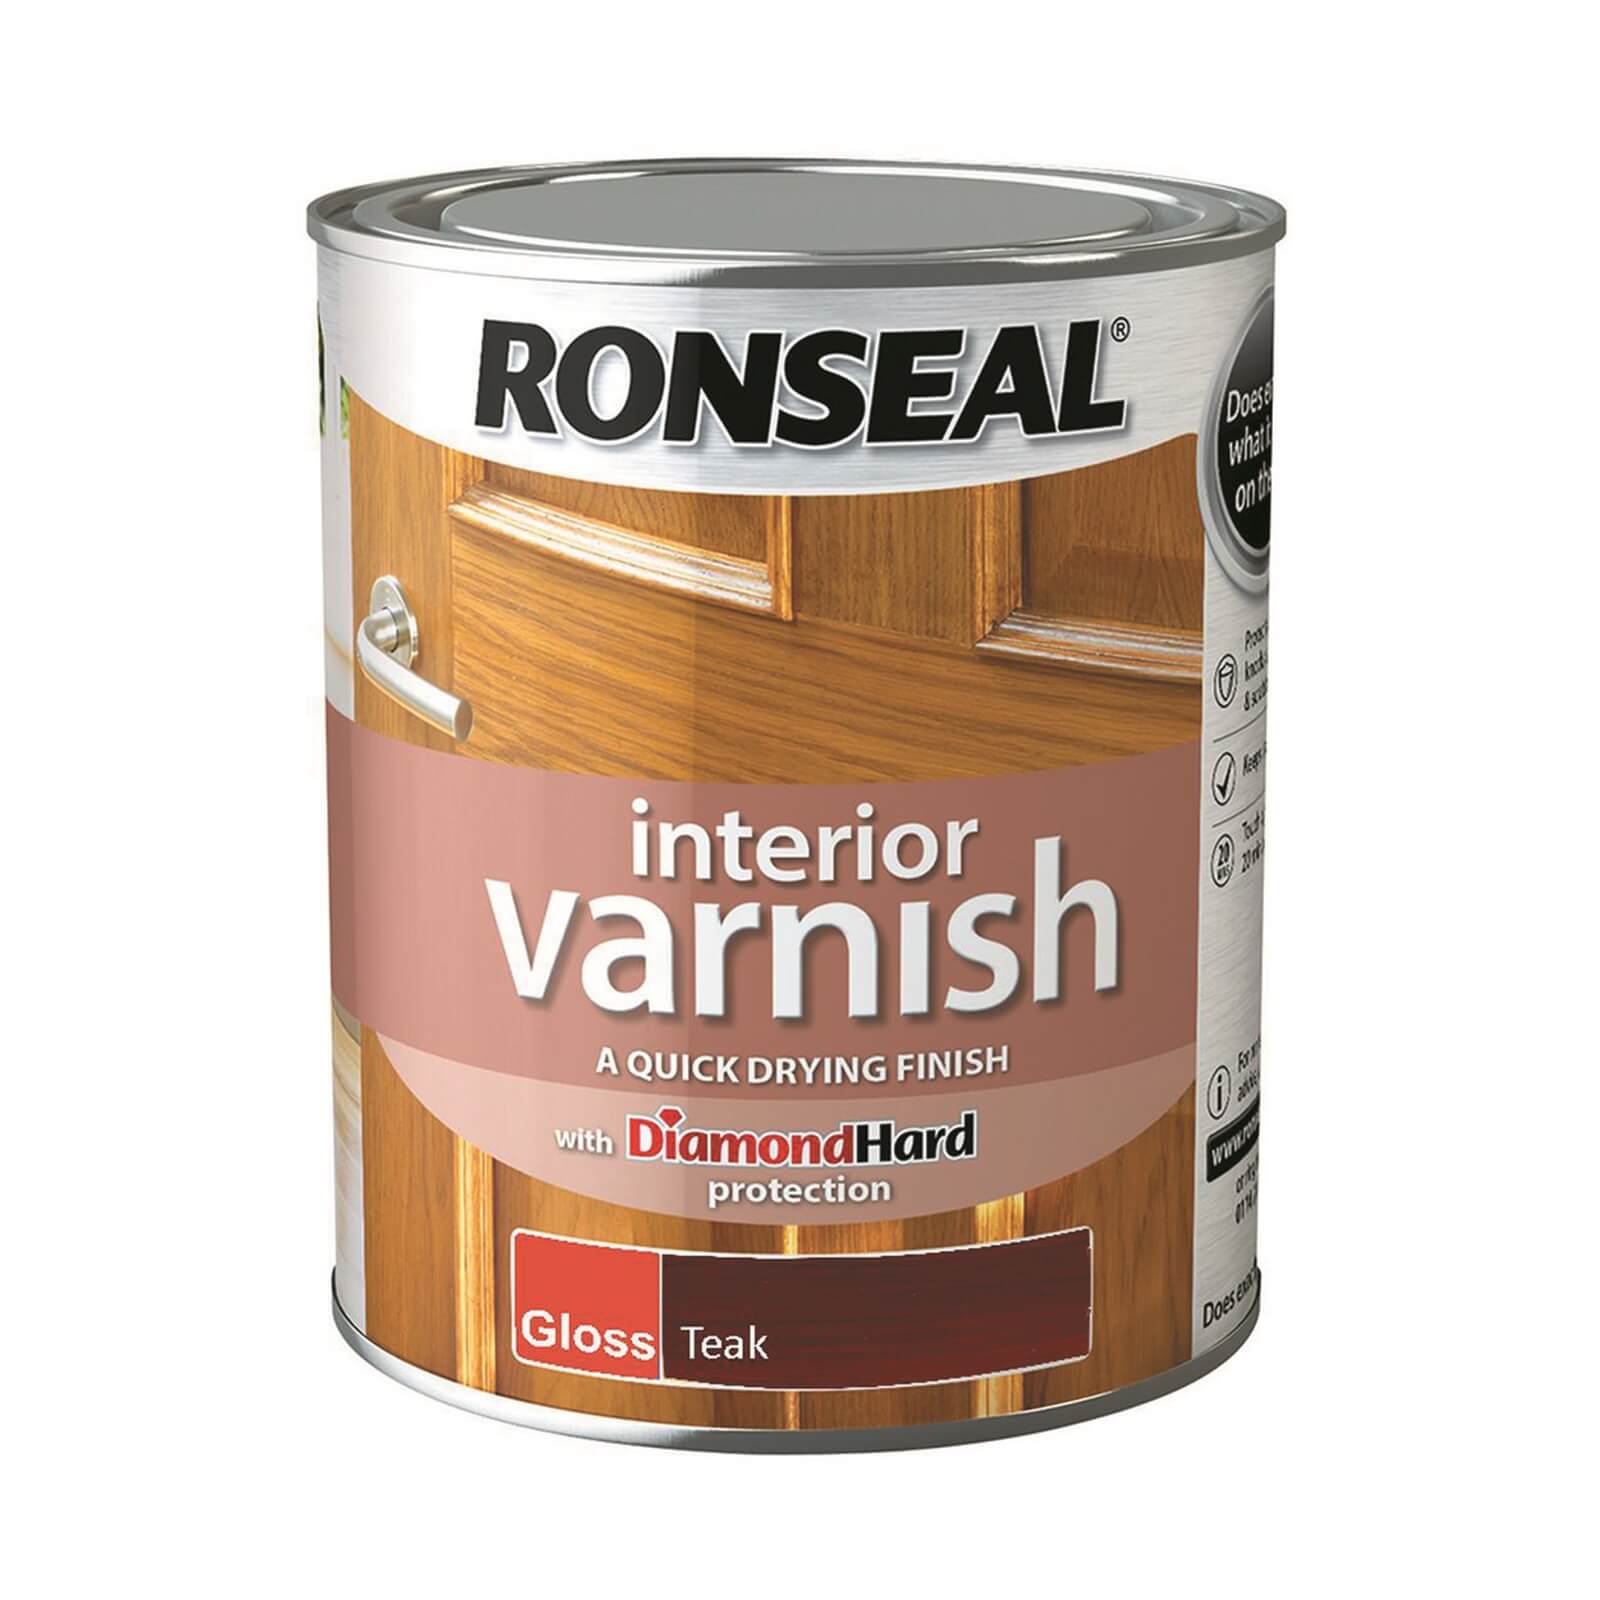 Ronseal Interior Varnish Gloss Teak - 750ml